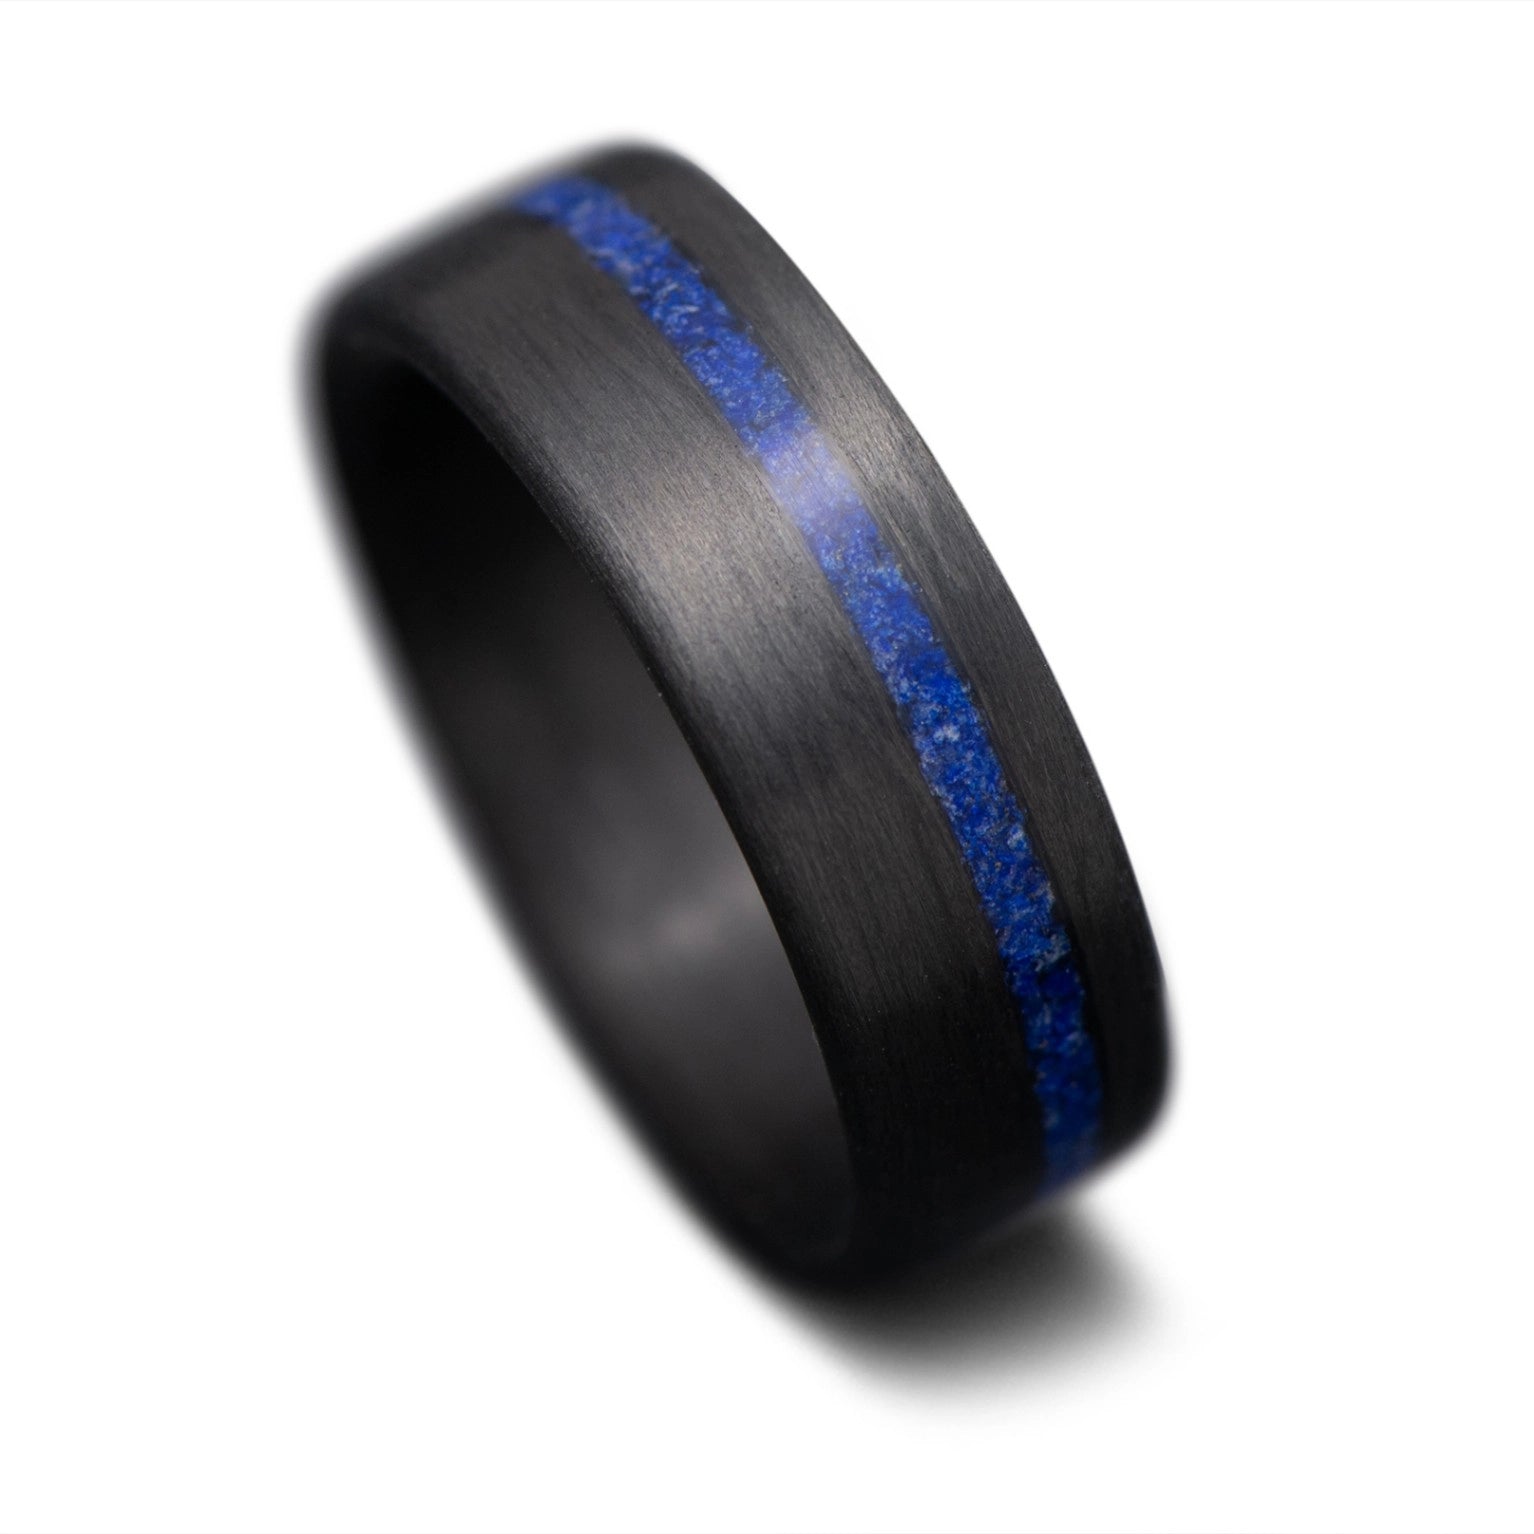 CarbonUni Core Ring with Lapis Lazuli inlay, 7mm -THE VERTEX